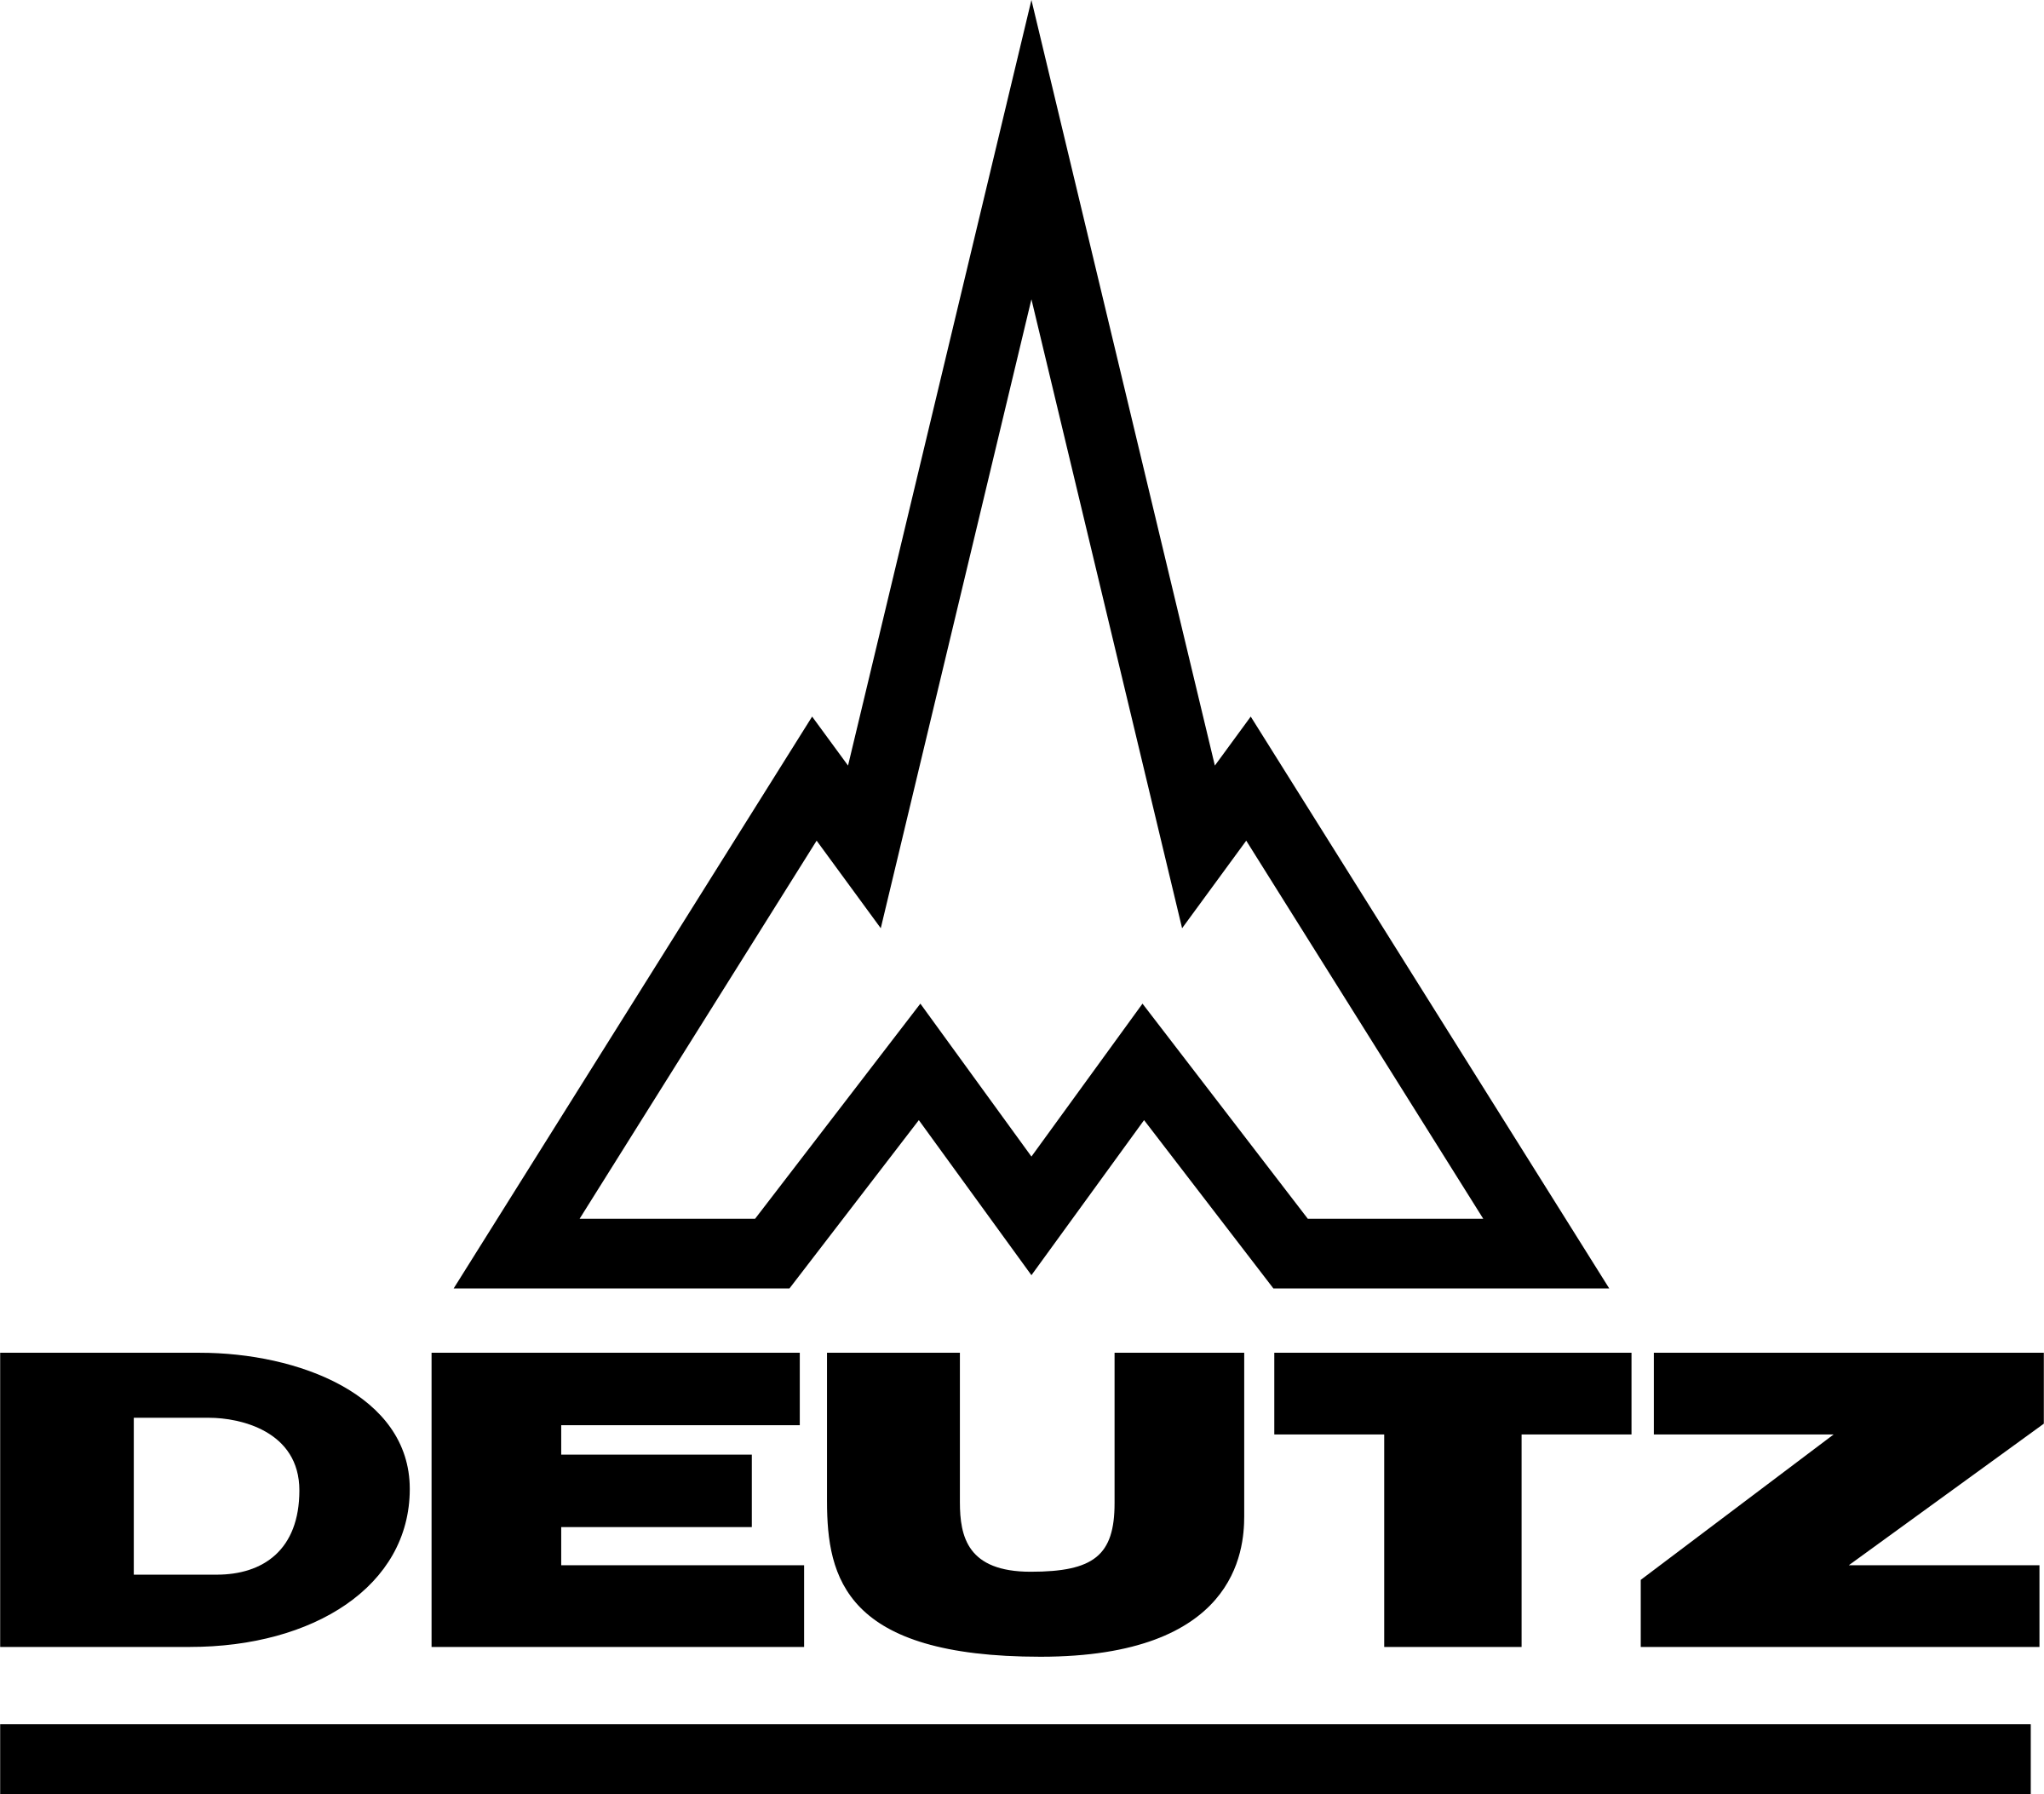 Duetz Logo - Deutz Logo PNG Transparent & SVG Vector - Freebie Supply